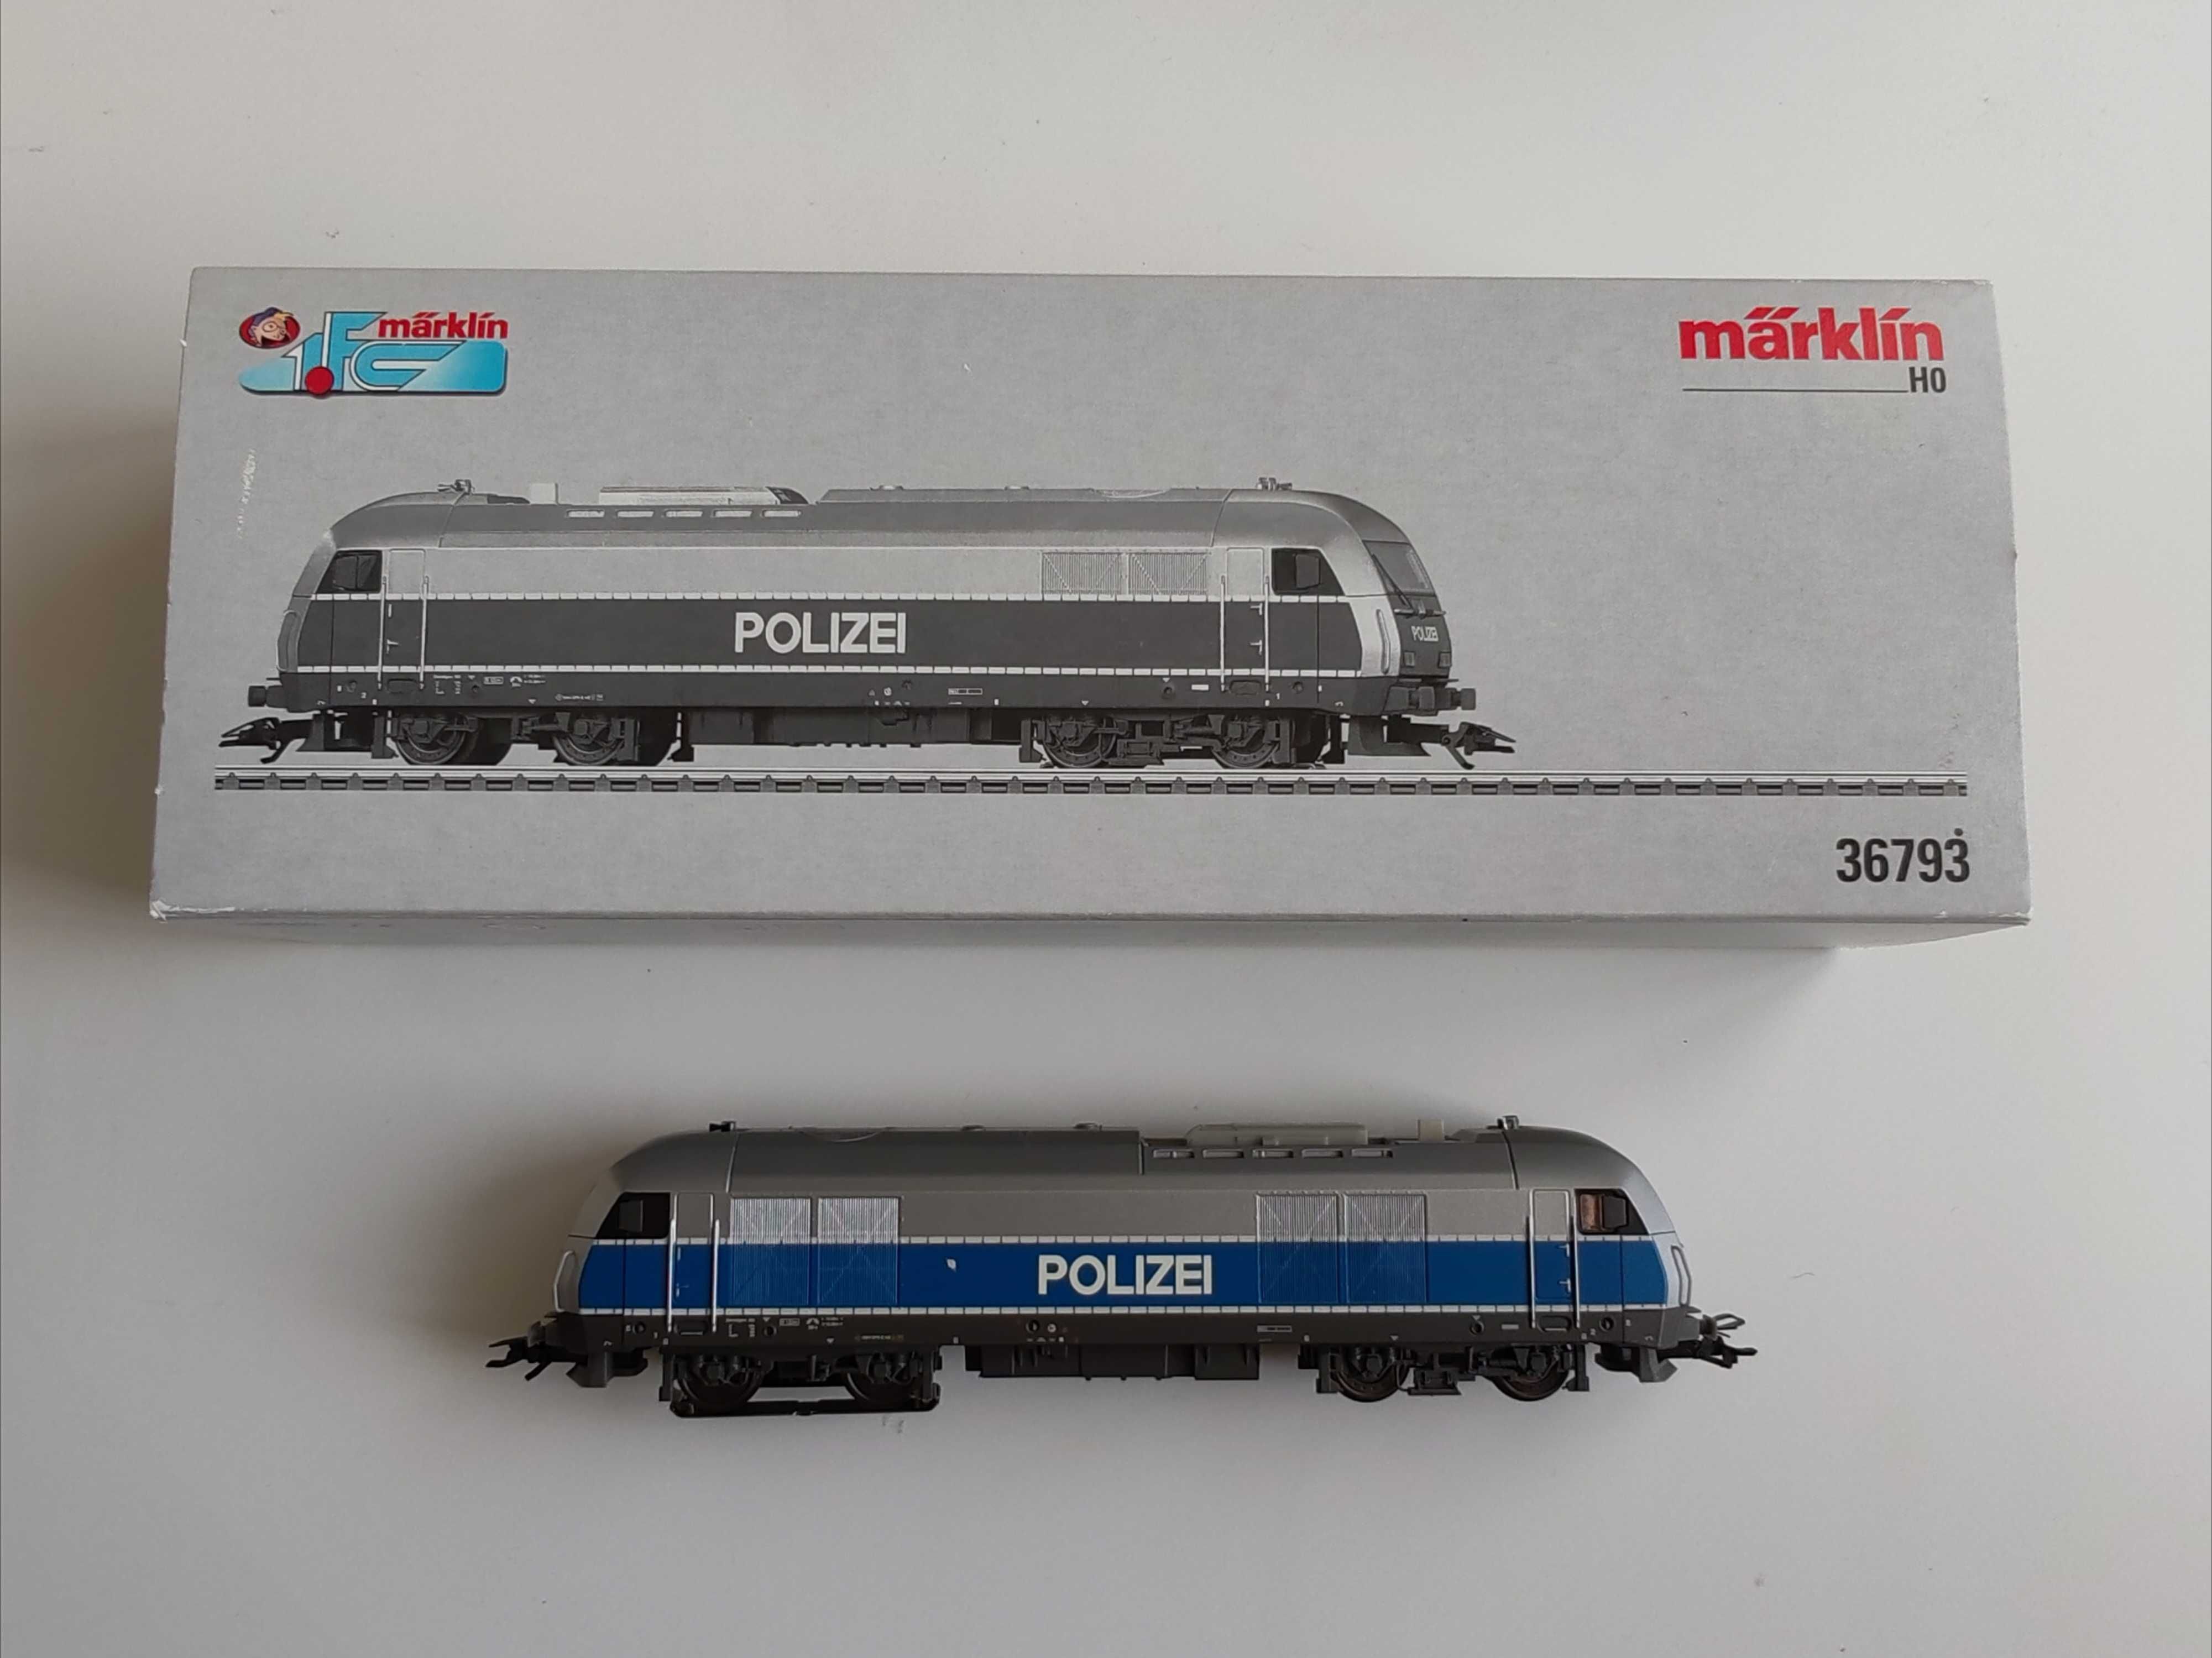 Marklin HO 36793 – Locomotiva Diesel – R20 “Hercules” da Policia Alemã